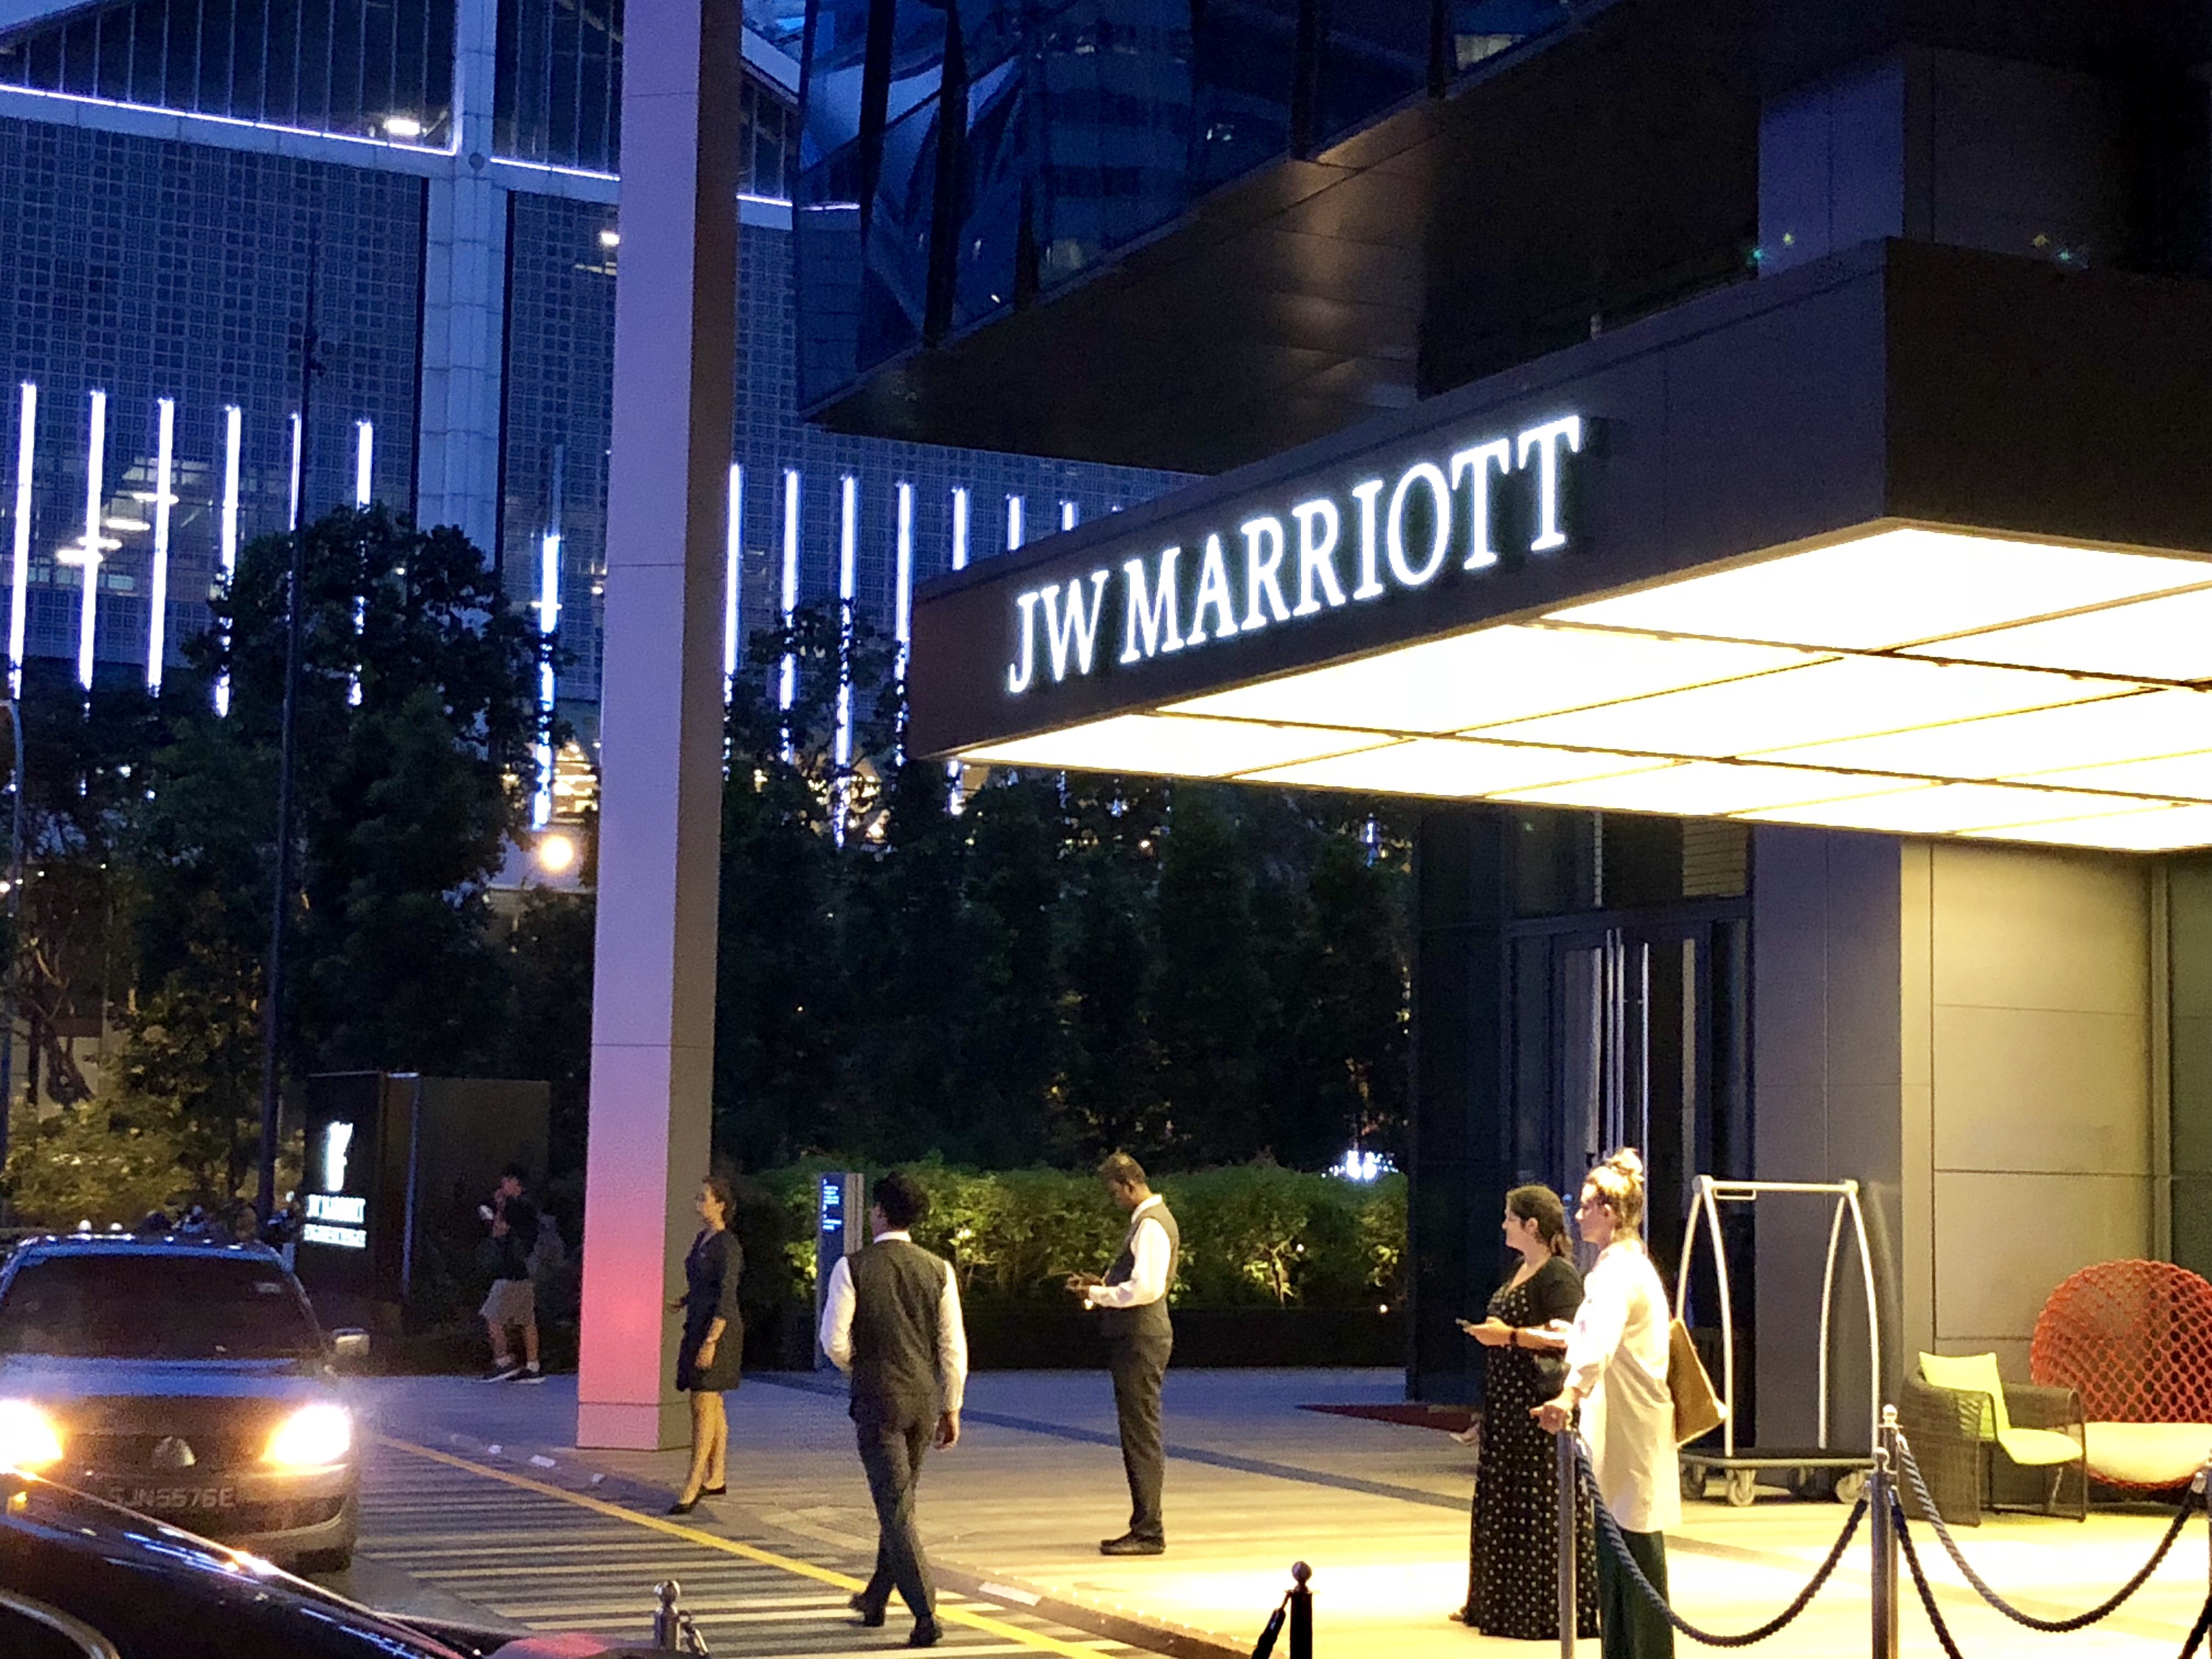 ¼JW Marriott Hotel